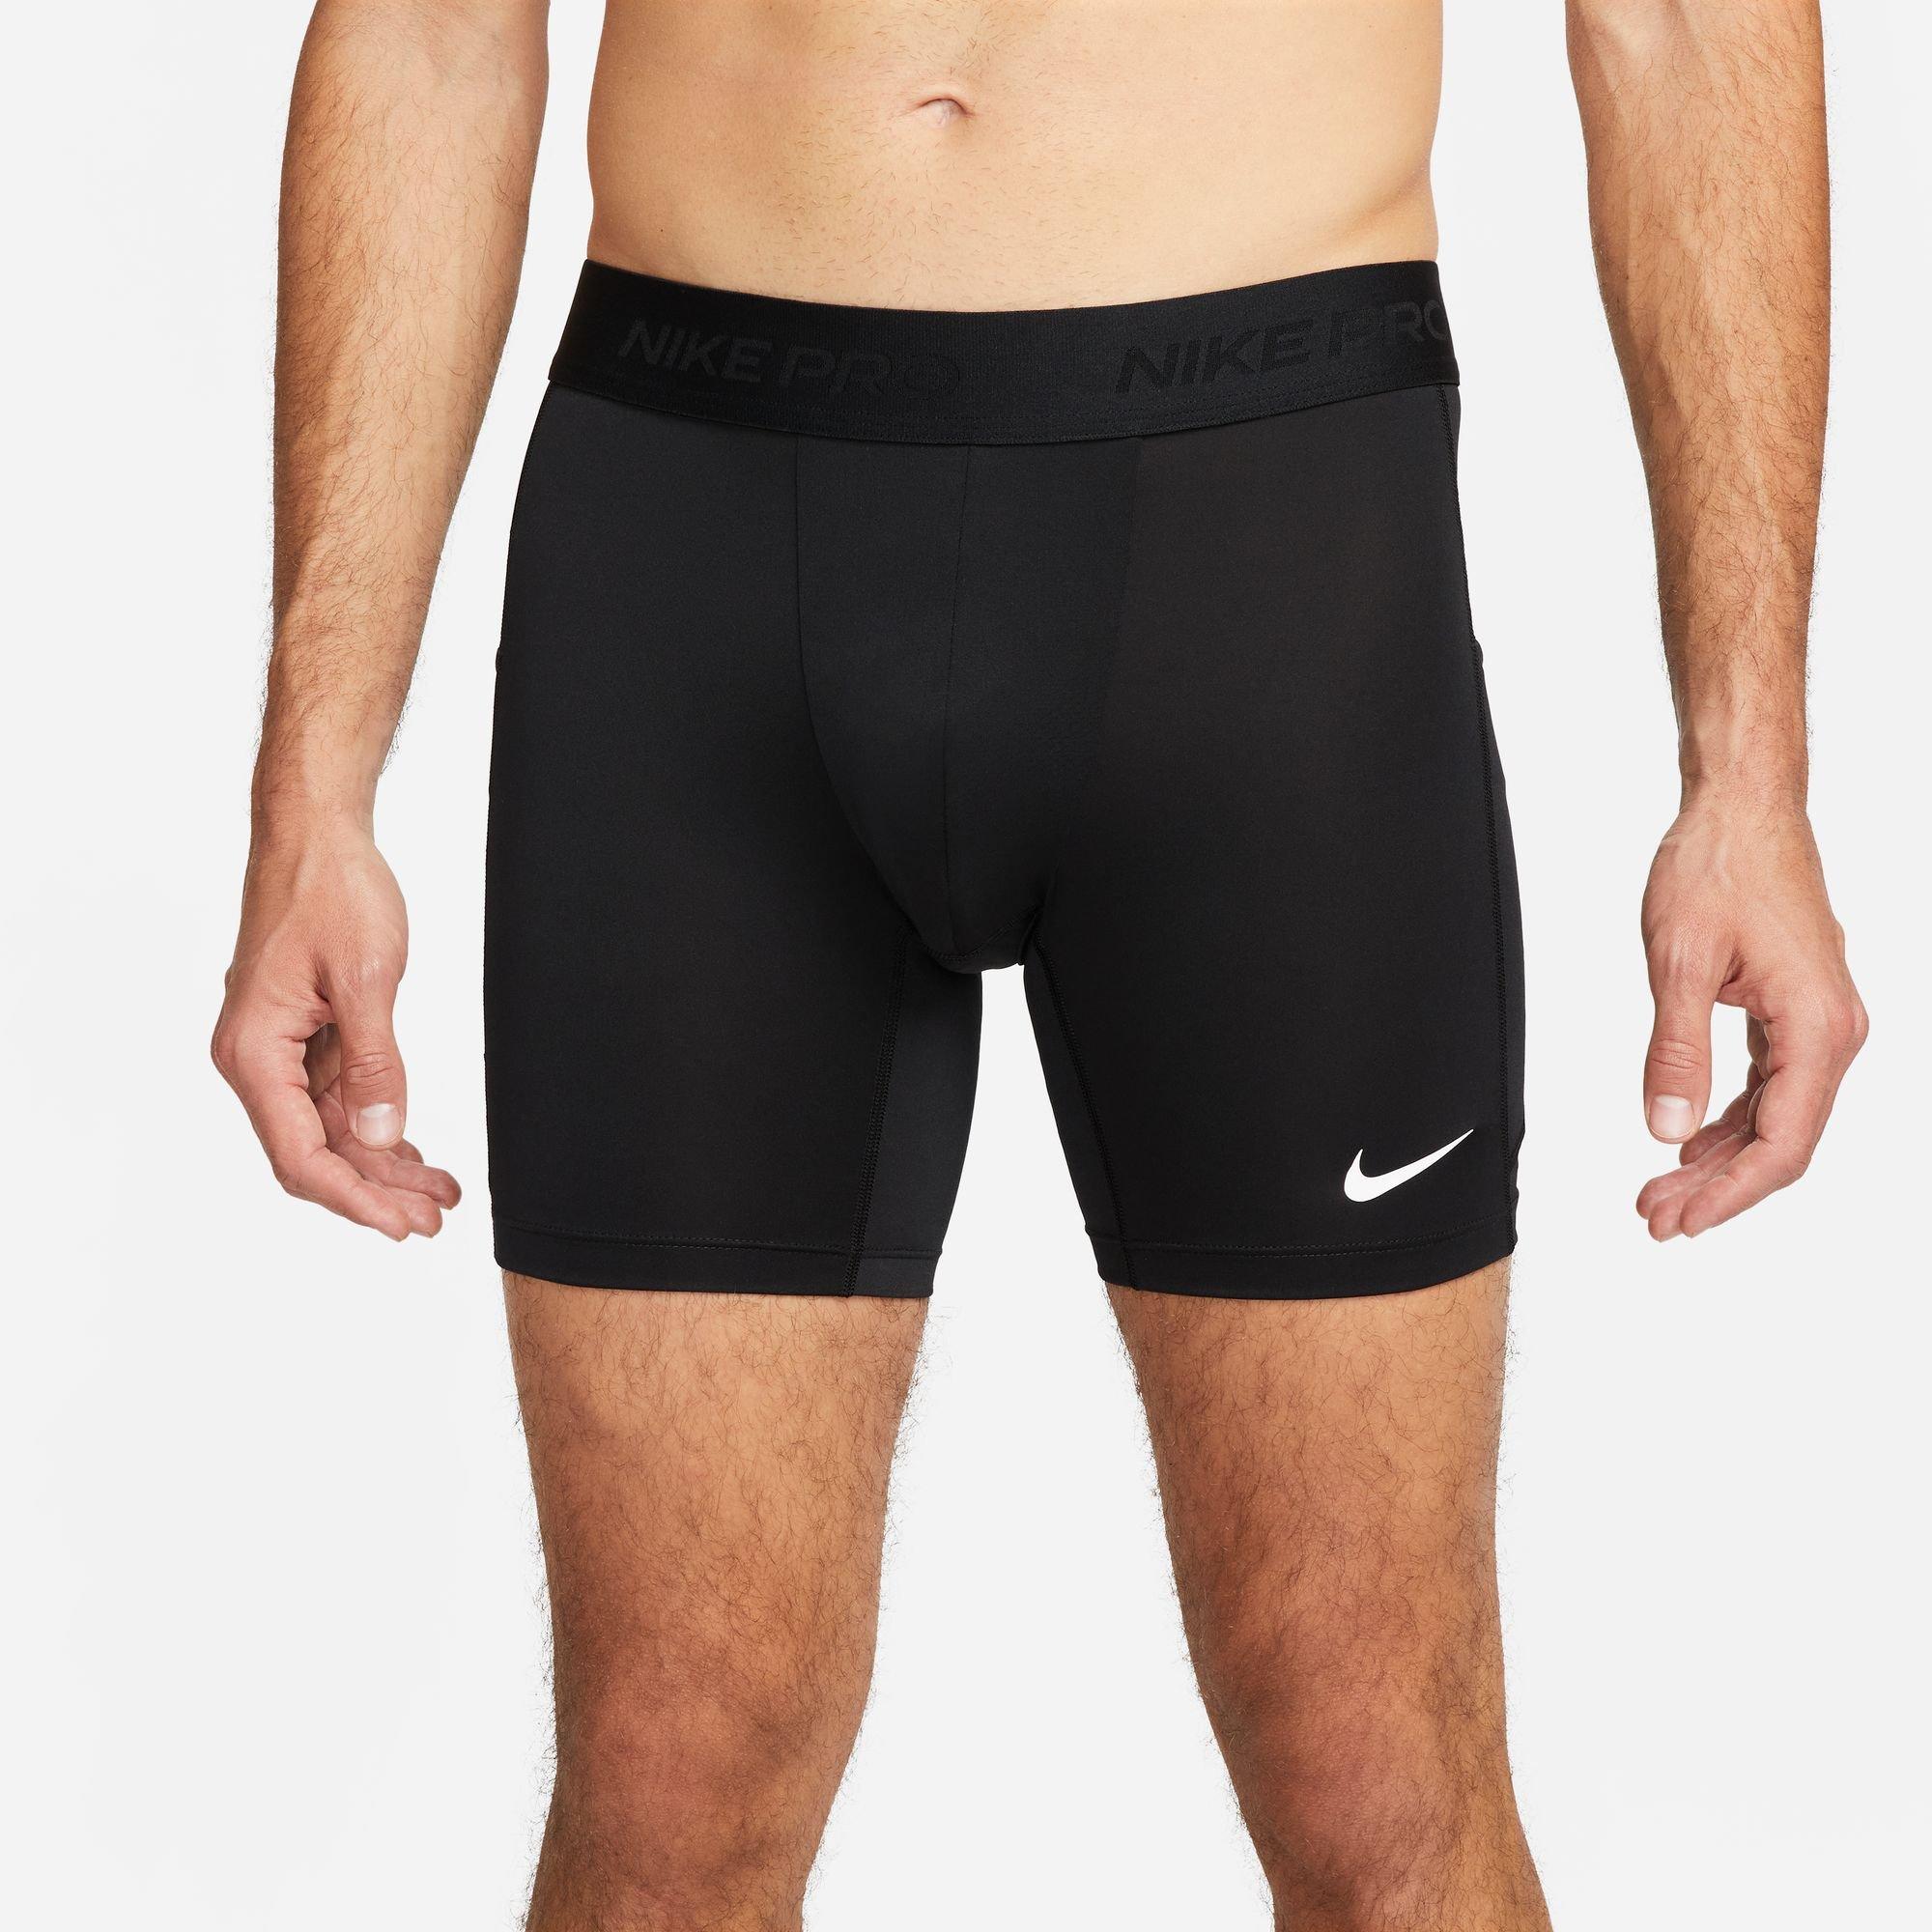 Men's PRO Dri-Fit 7 Shorts from Nike